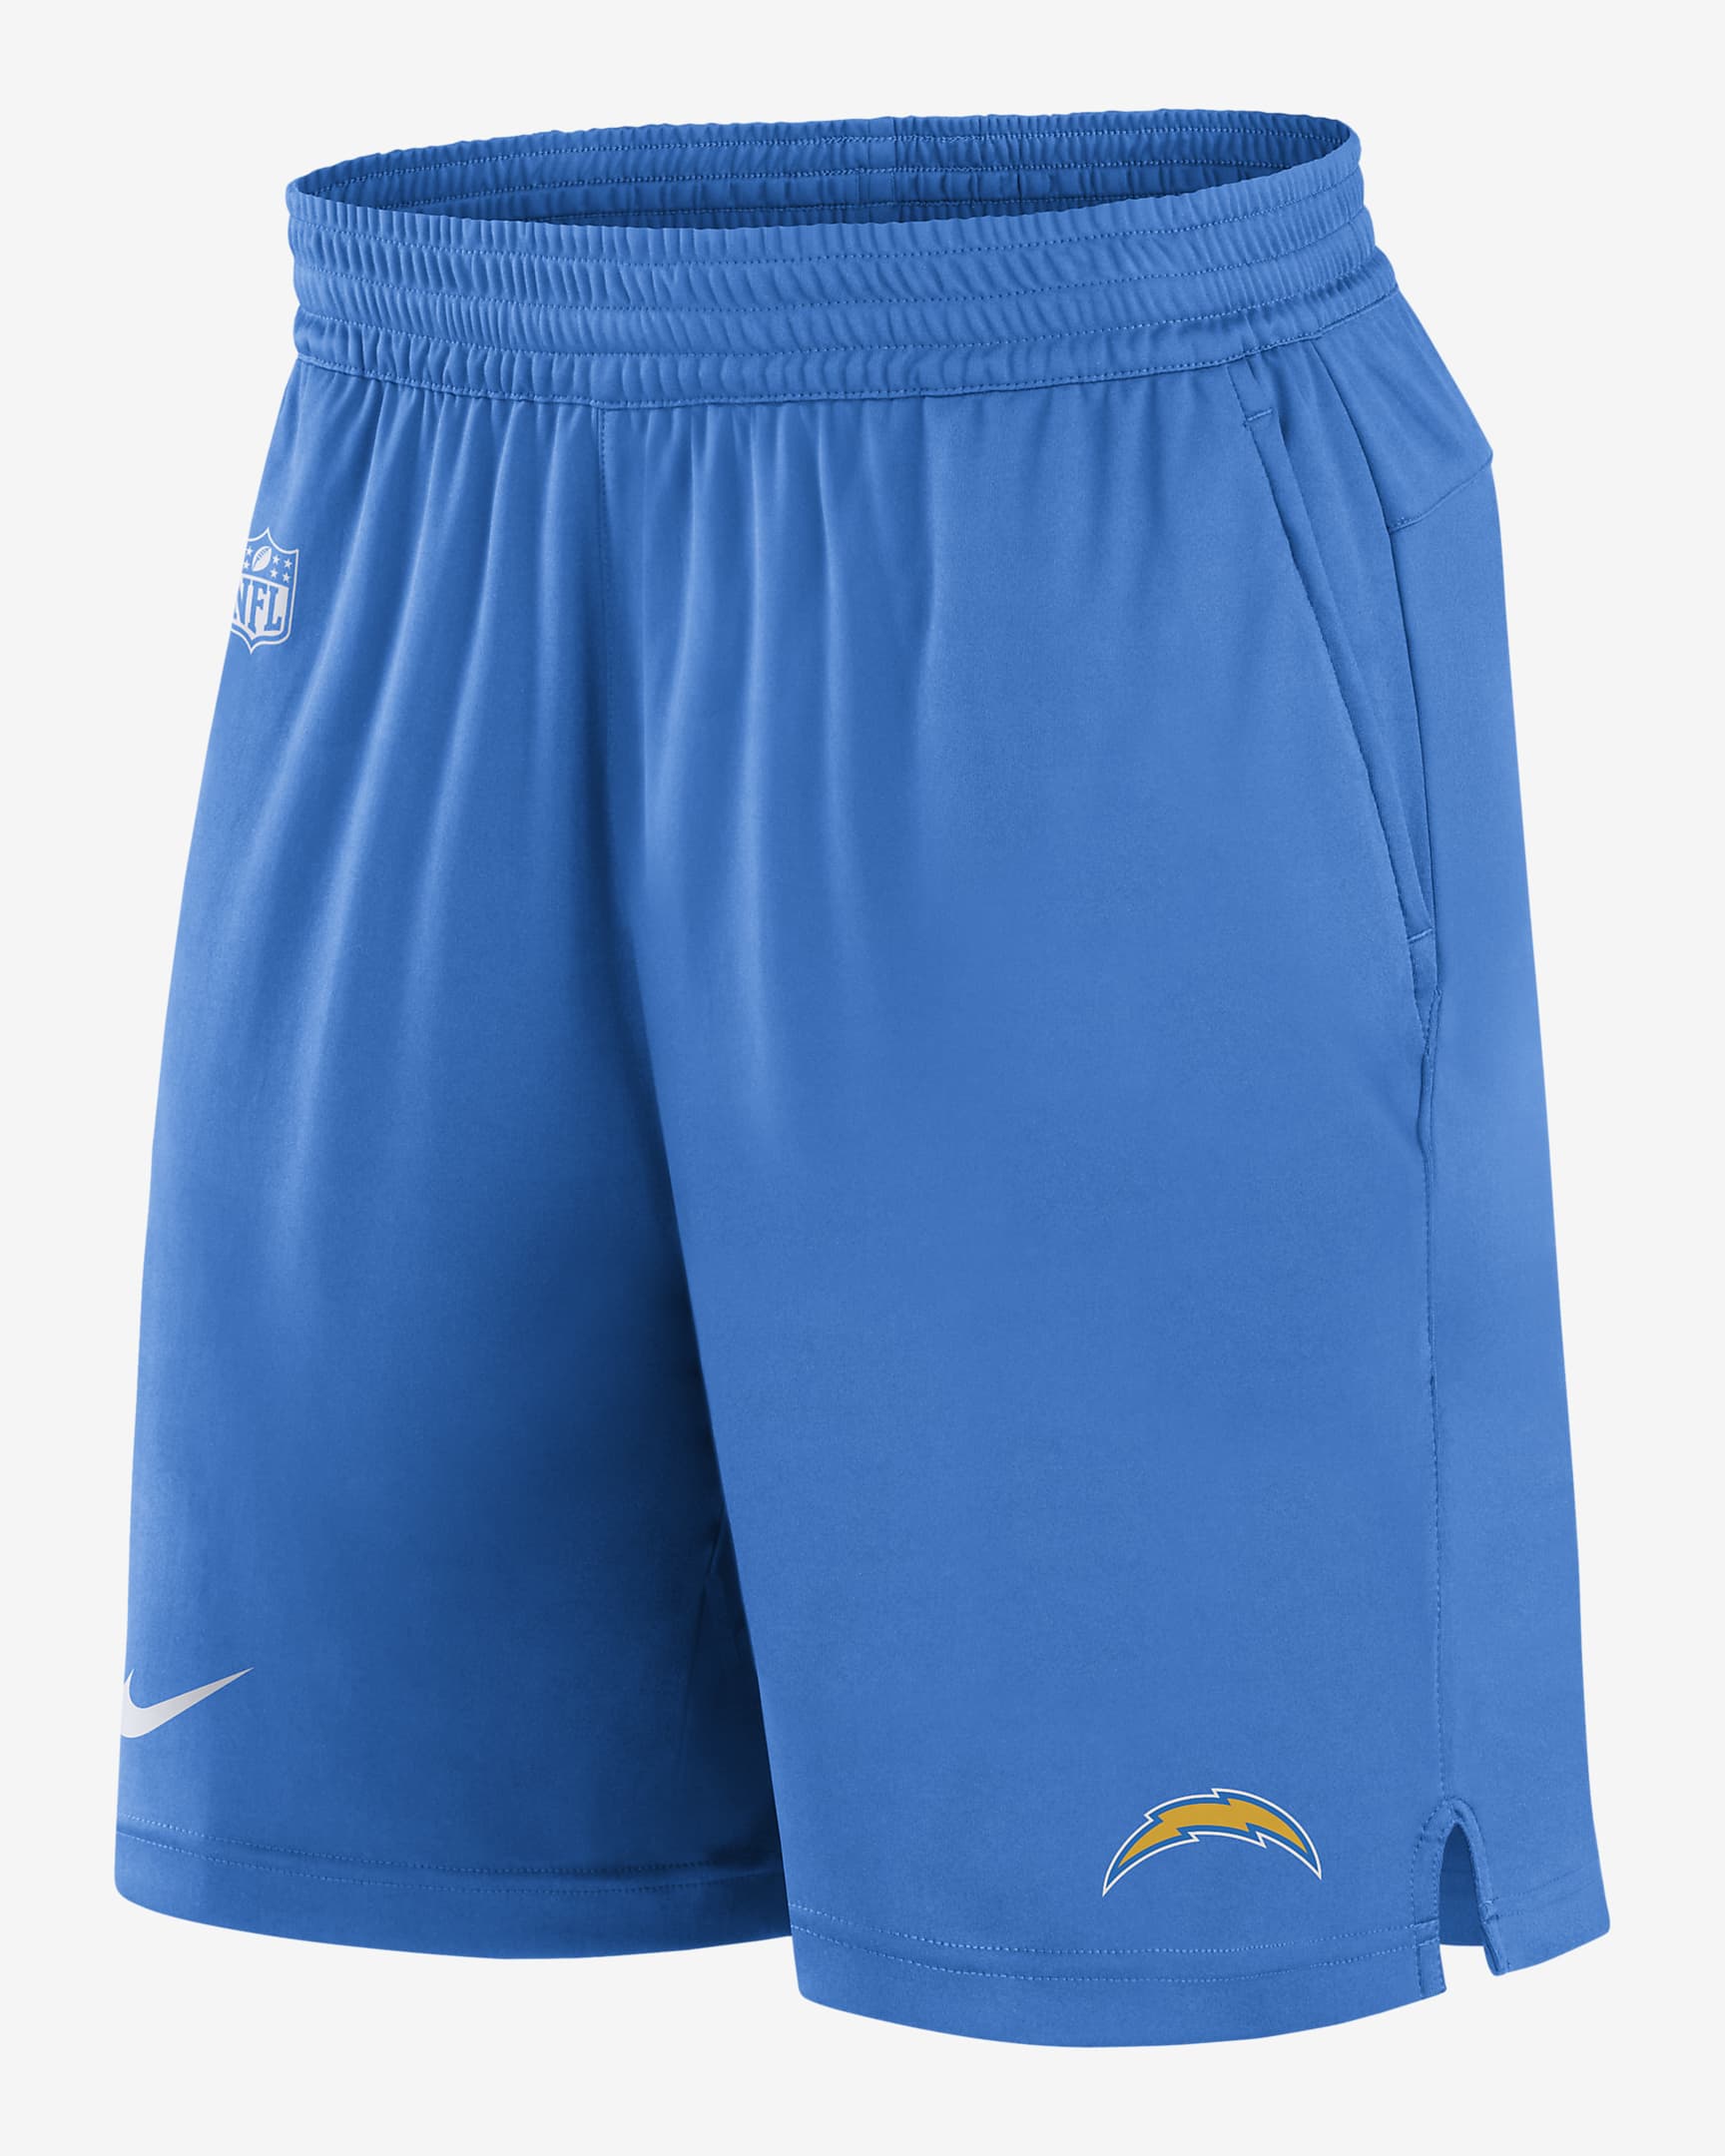 Nike Dri-FIT Sideline (NFL Los Angeles Chargers) Men's Shorts. Nike.com